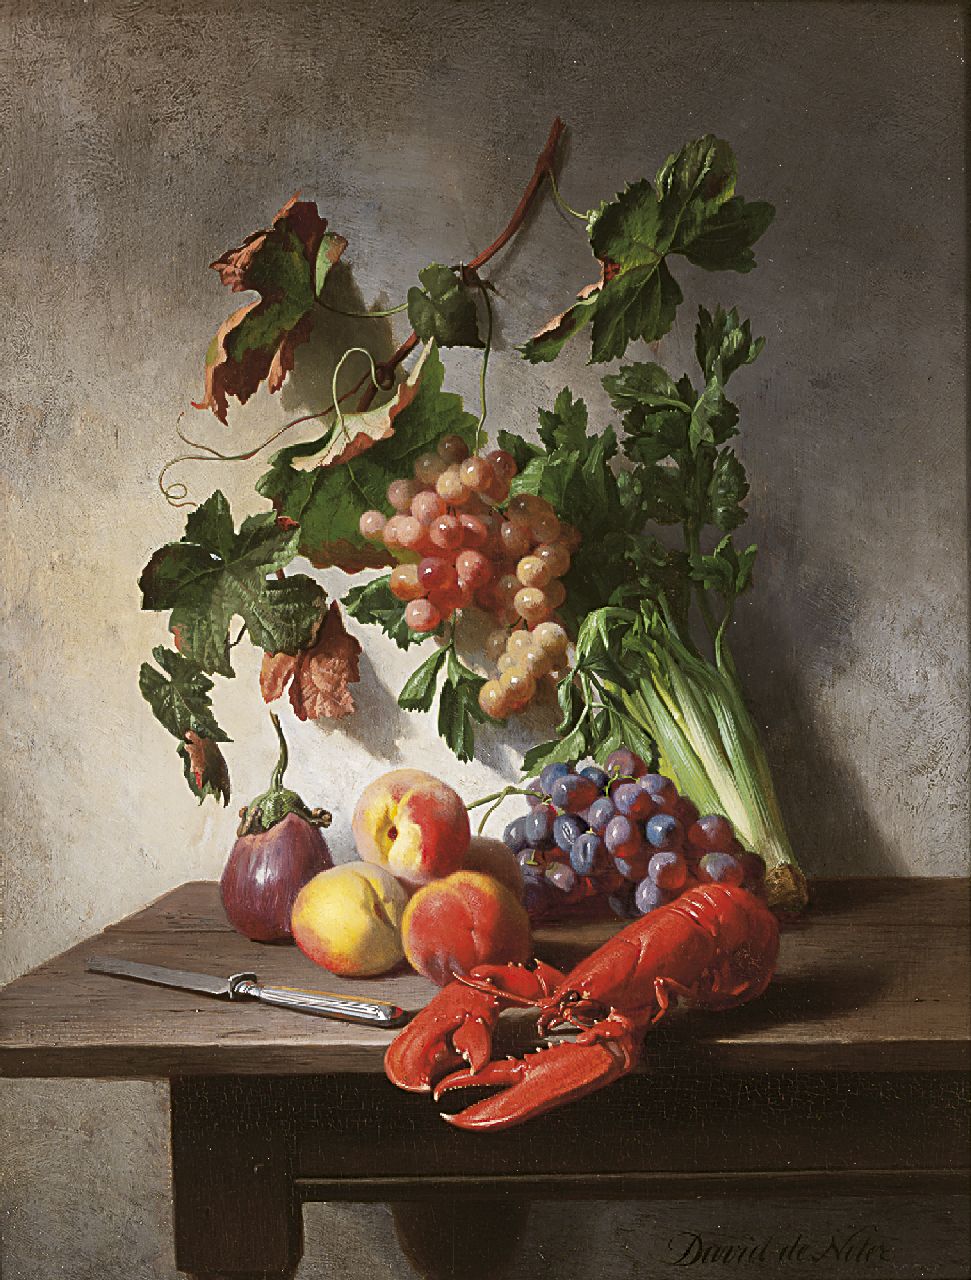 Noter D.E.J. de | 'David' Emile Joseph de Noter, A still life with fruits, vegetables and a lobster, oil on panel 37.0 x 28.3 cm, signed l.r.